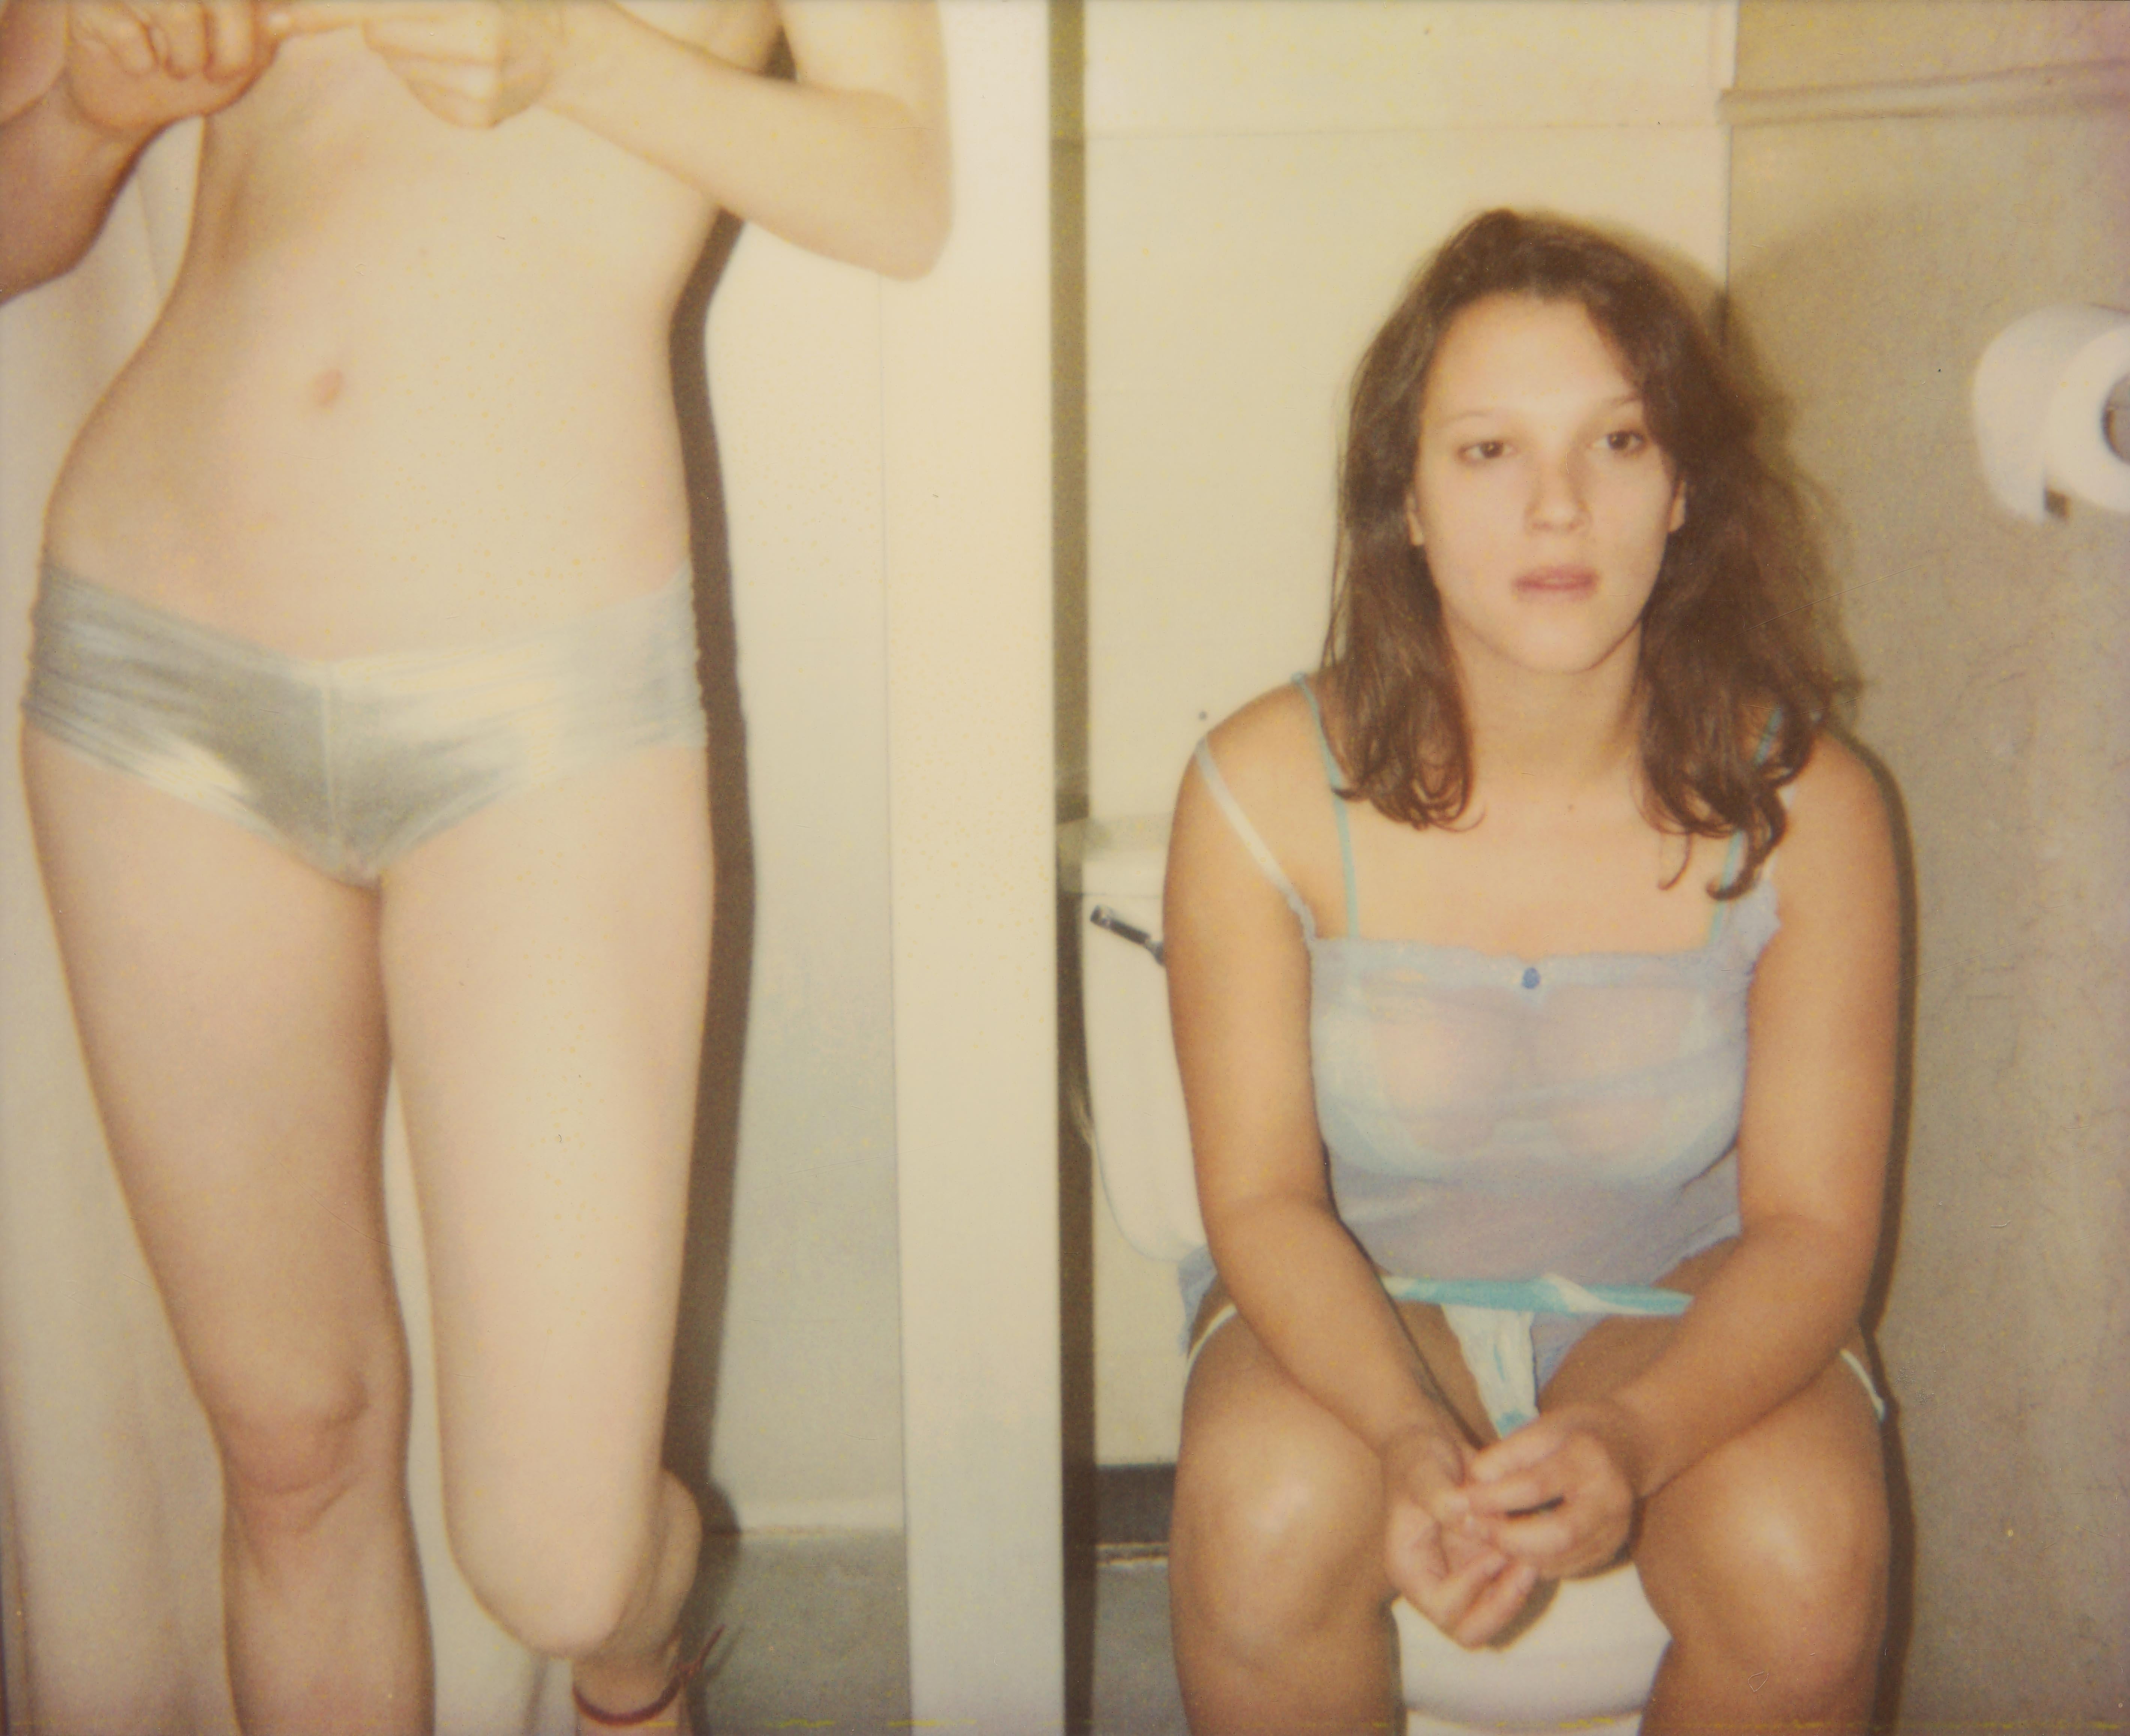 Stefanie Schneider Color Photograph - 'Taking Turns' 21st Century, Polaroid, Nude Photography, Color